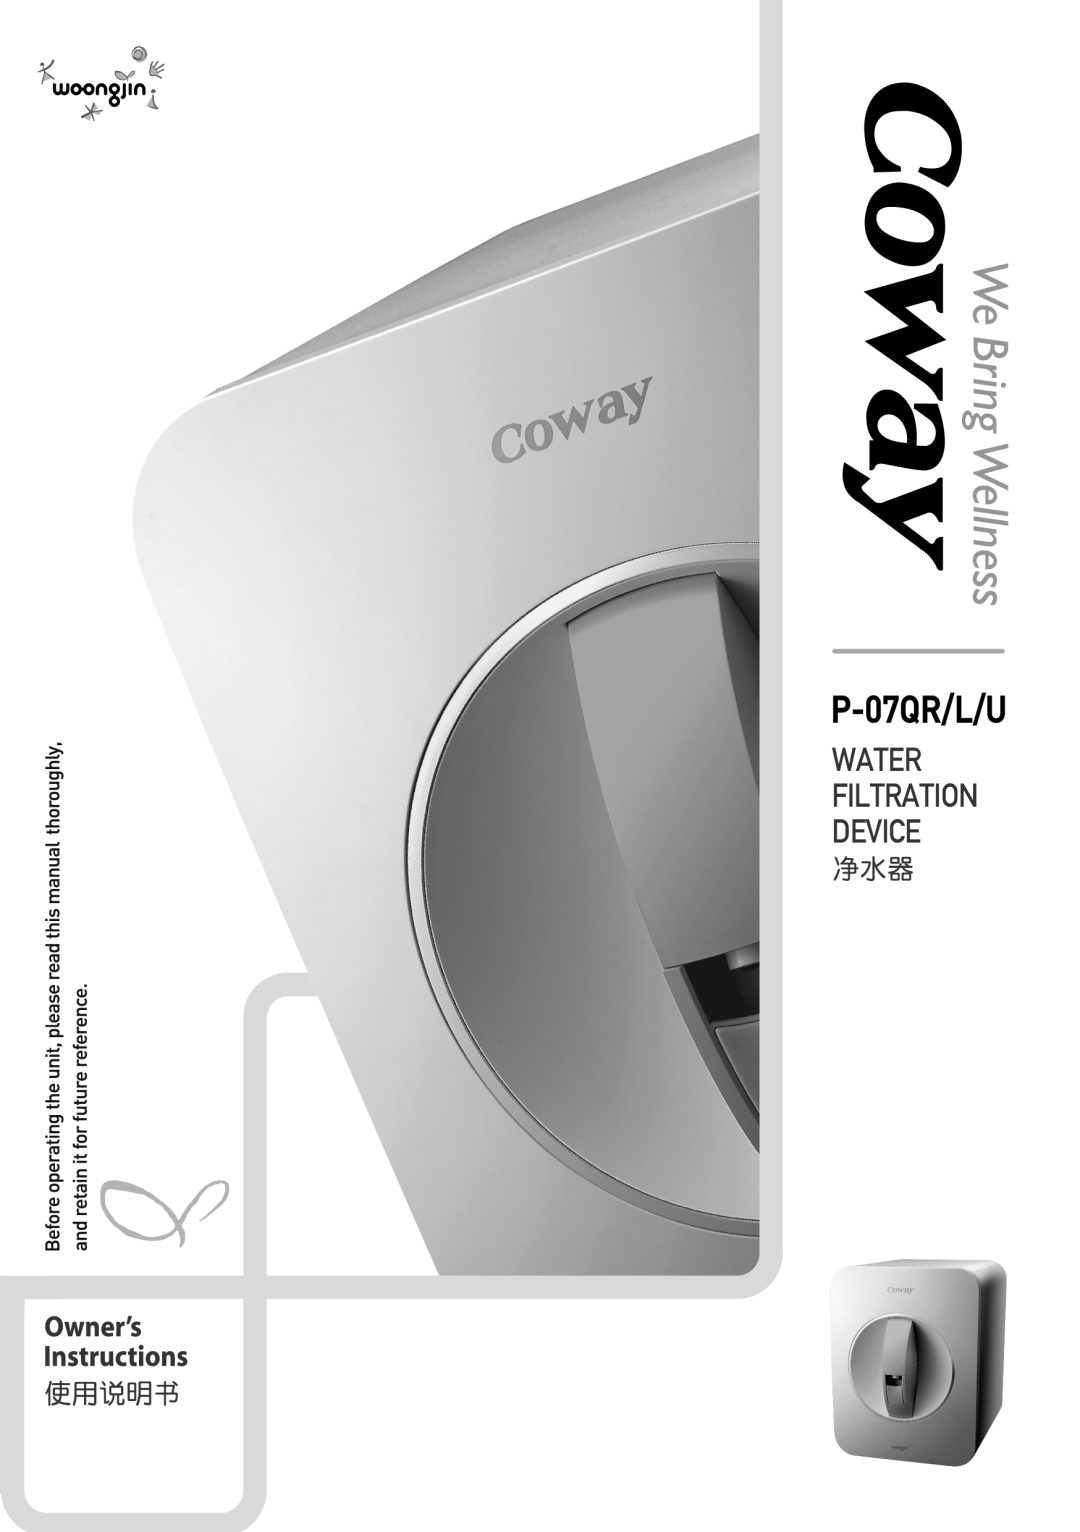 Coway P-07QU, P-07QL manual P-07QR/L/U, Water Filtration Device 